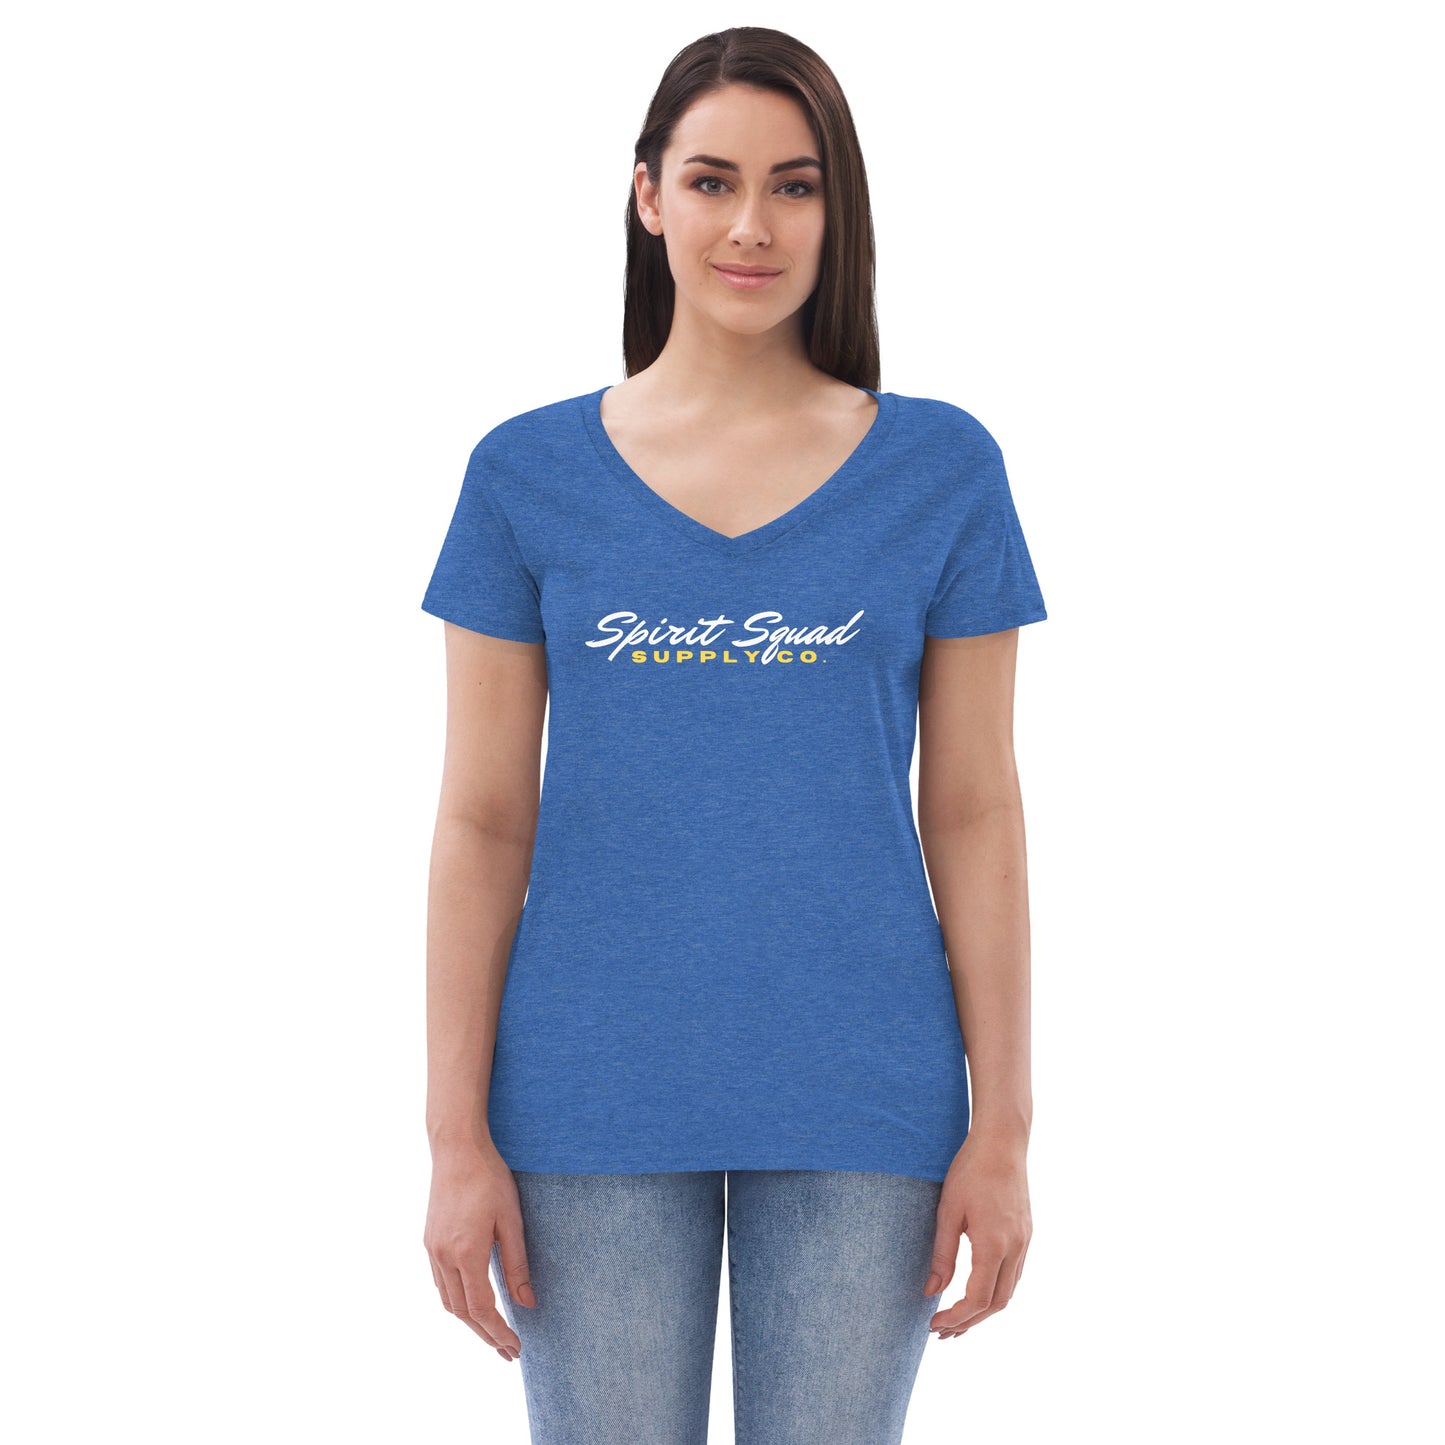 Spirit Squad Supply Co – Women’s recycled v-neck t-shirt